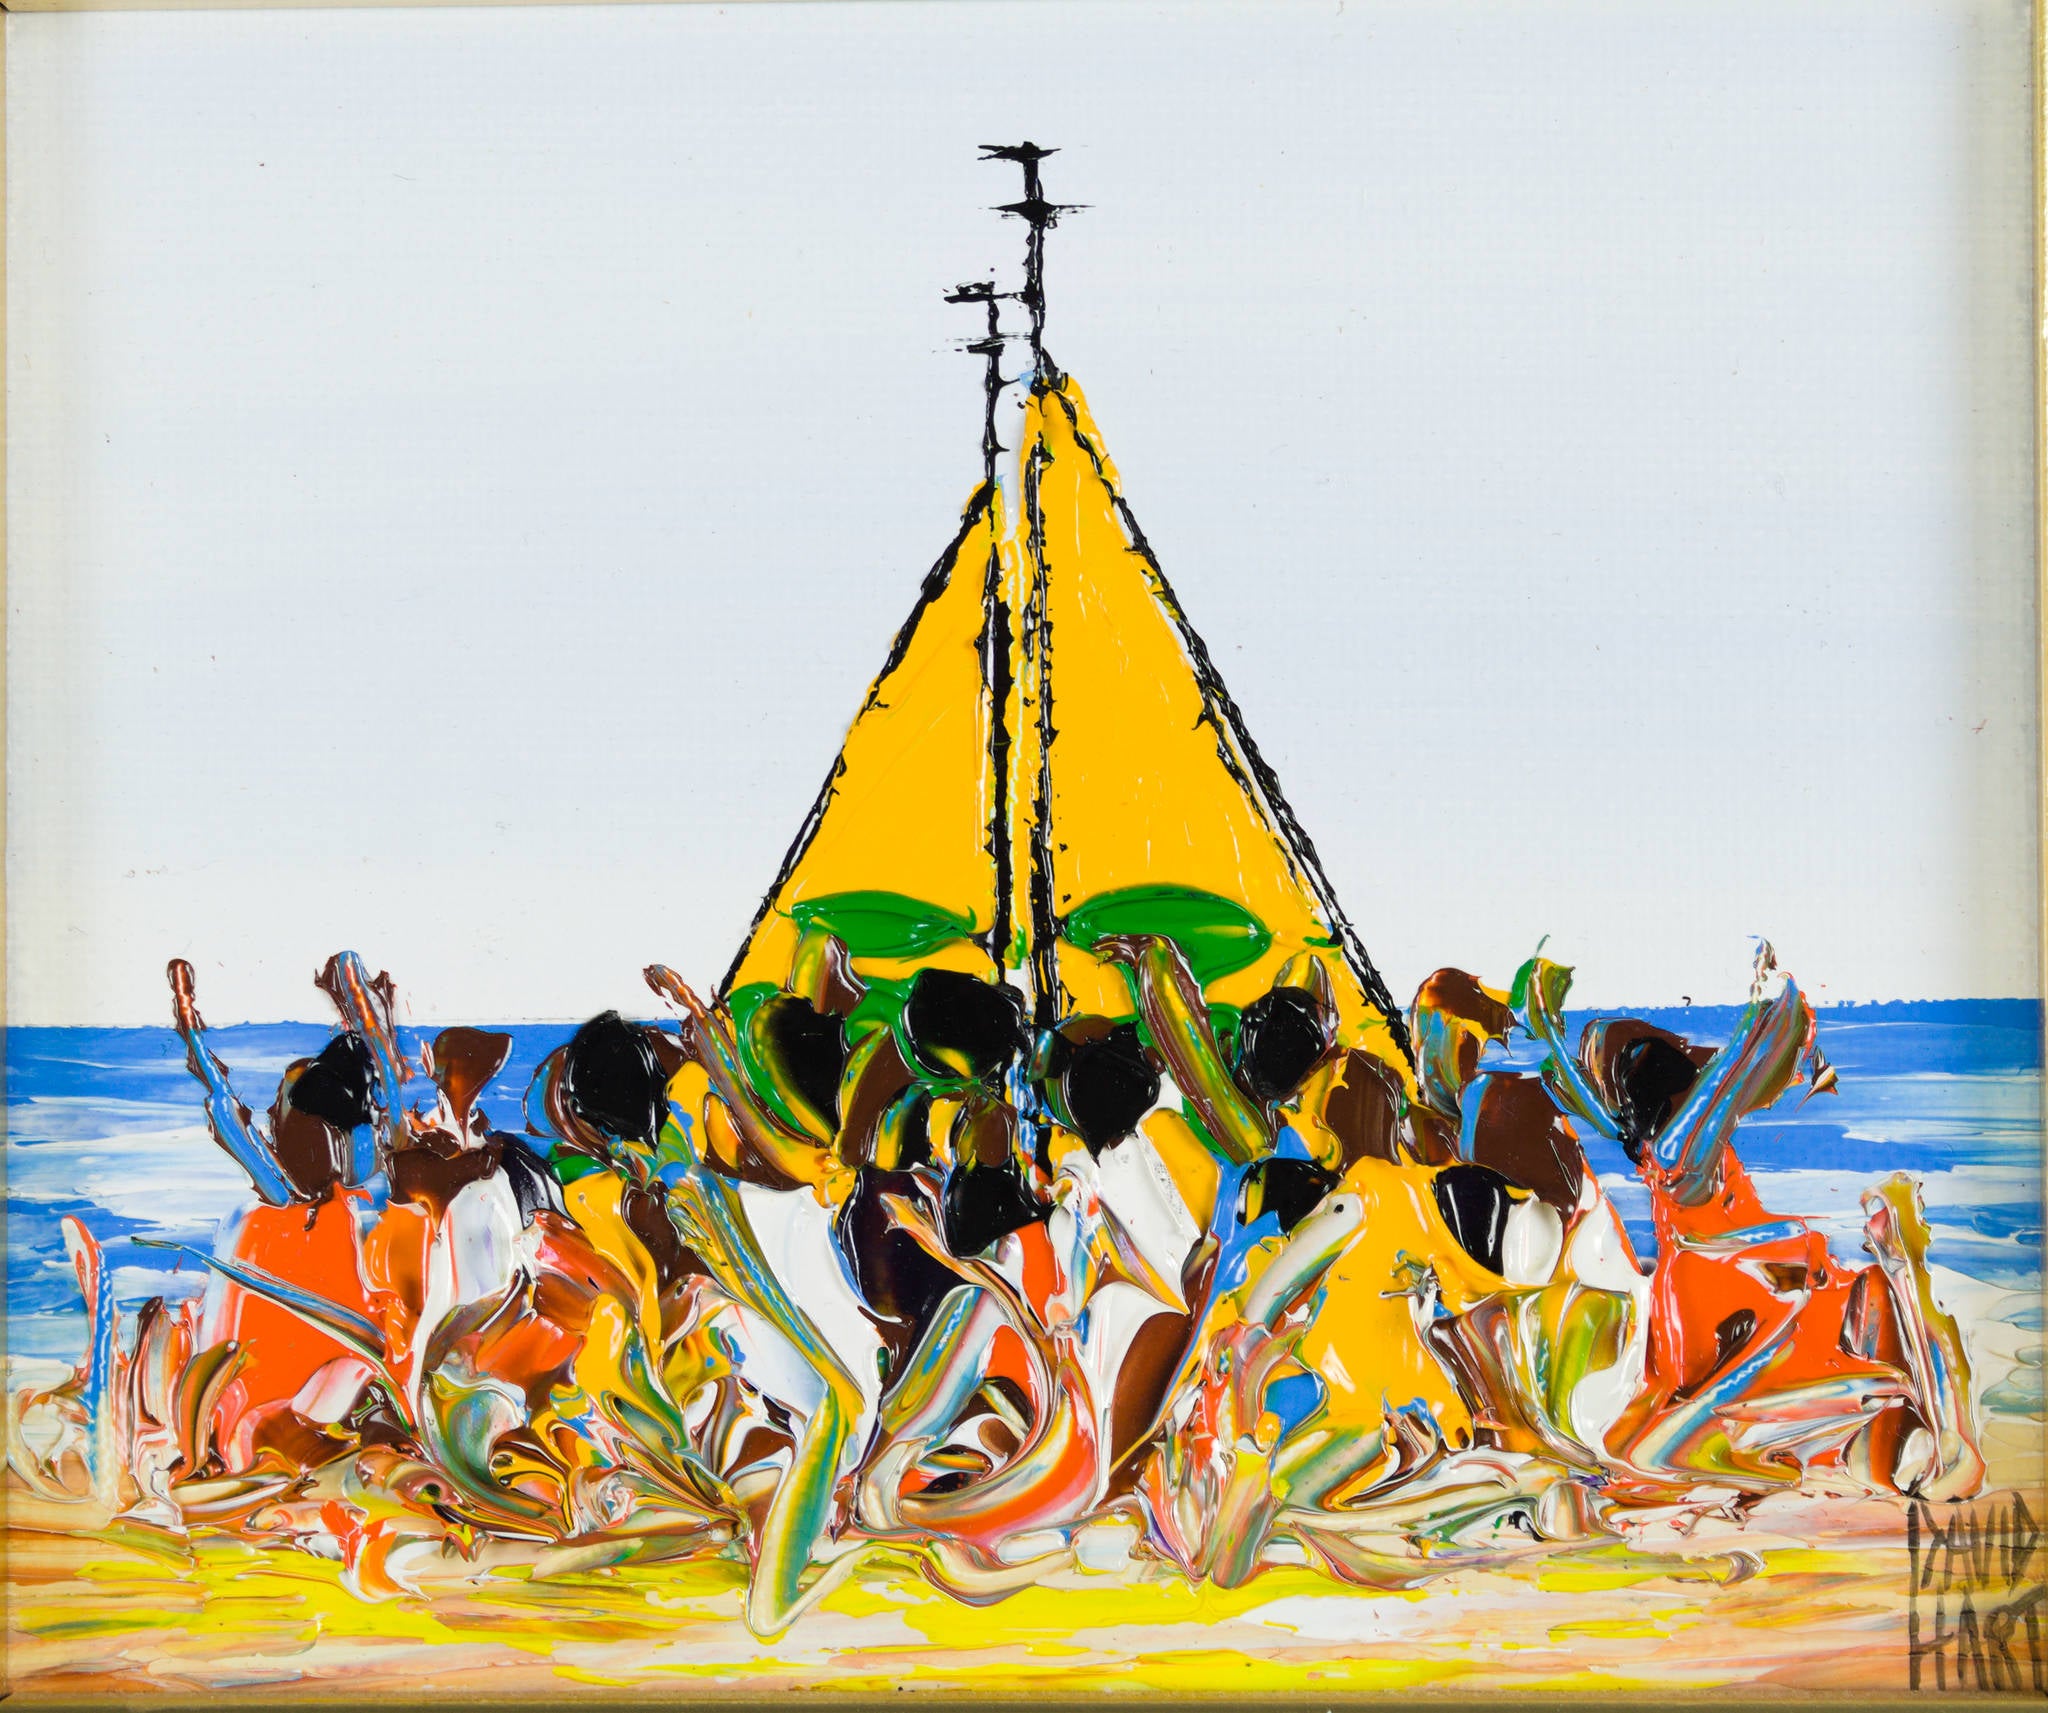 David Hart 'Untitled (Golden Sailboat)'